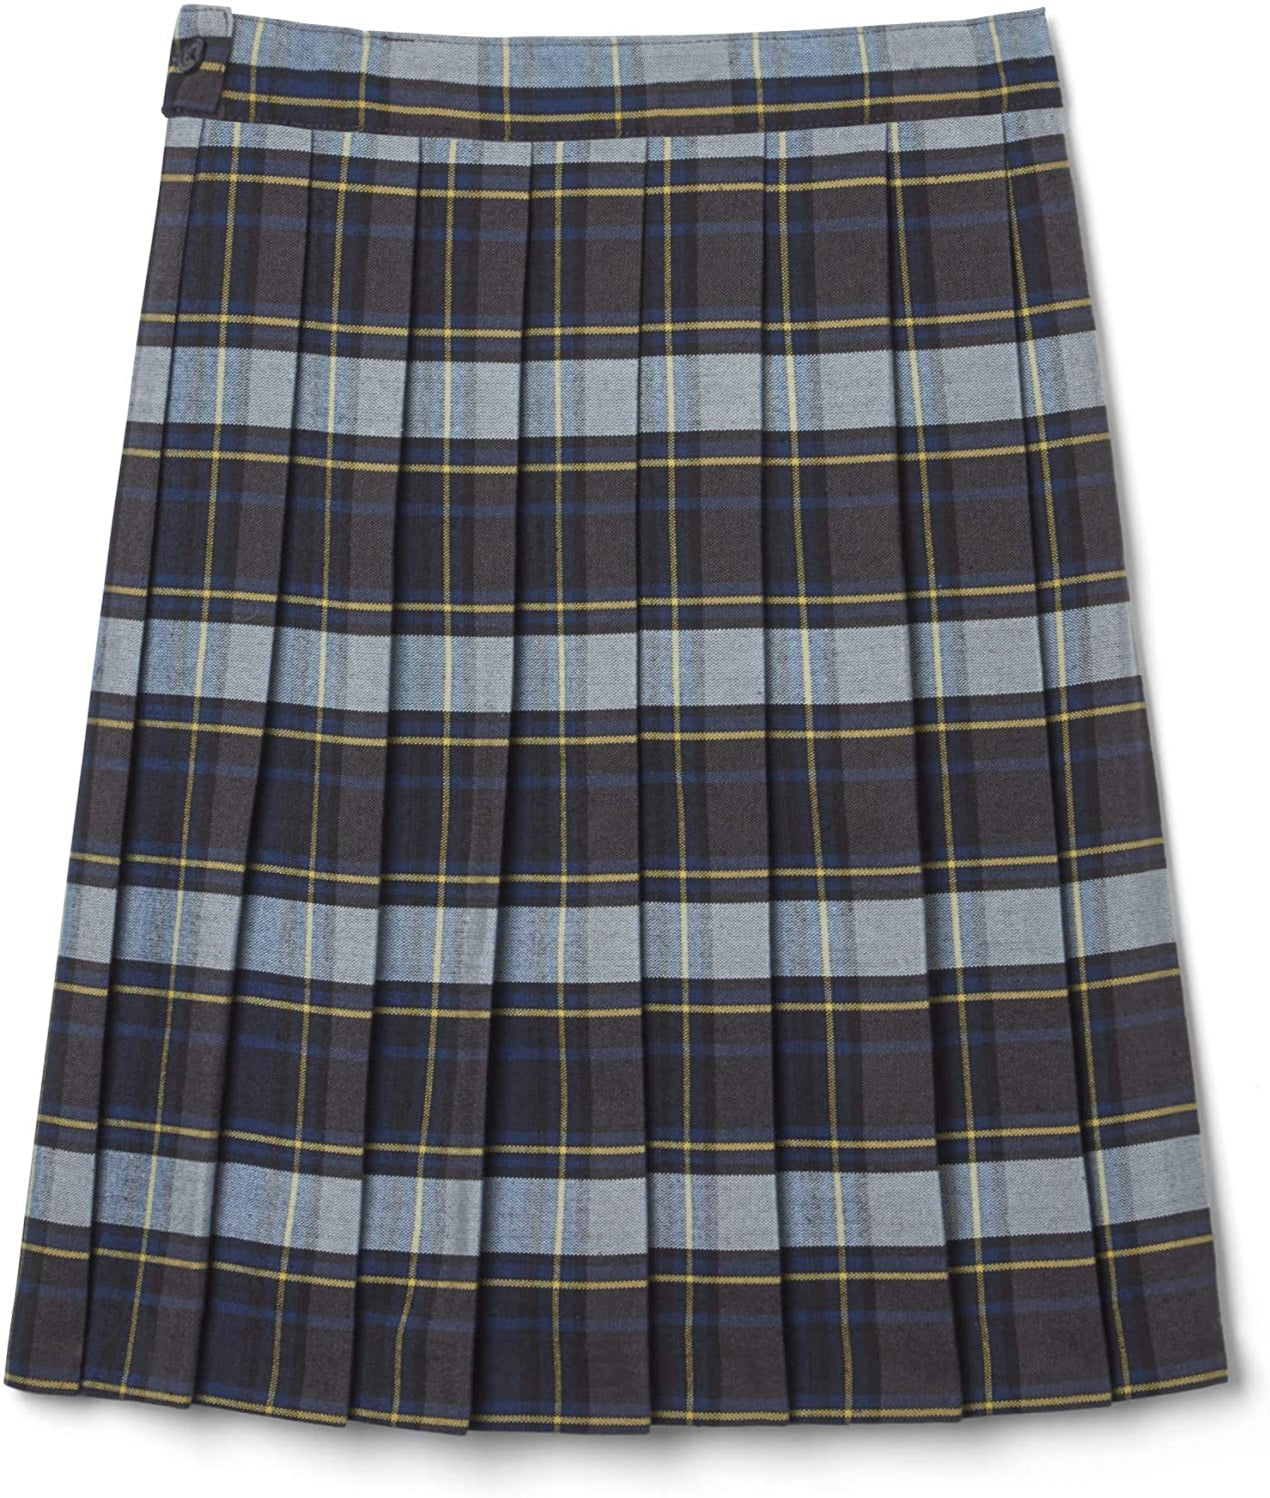 Skirt Plaid #57 (Blue/Gold Plaid) — Family Uniforms